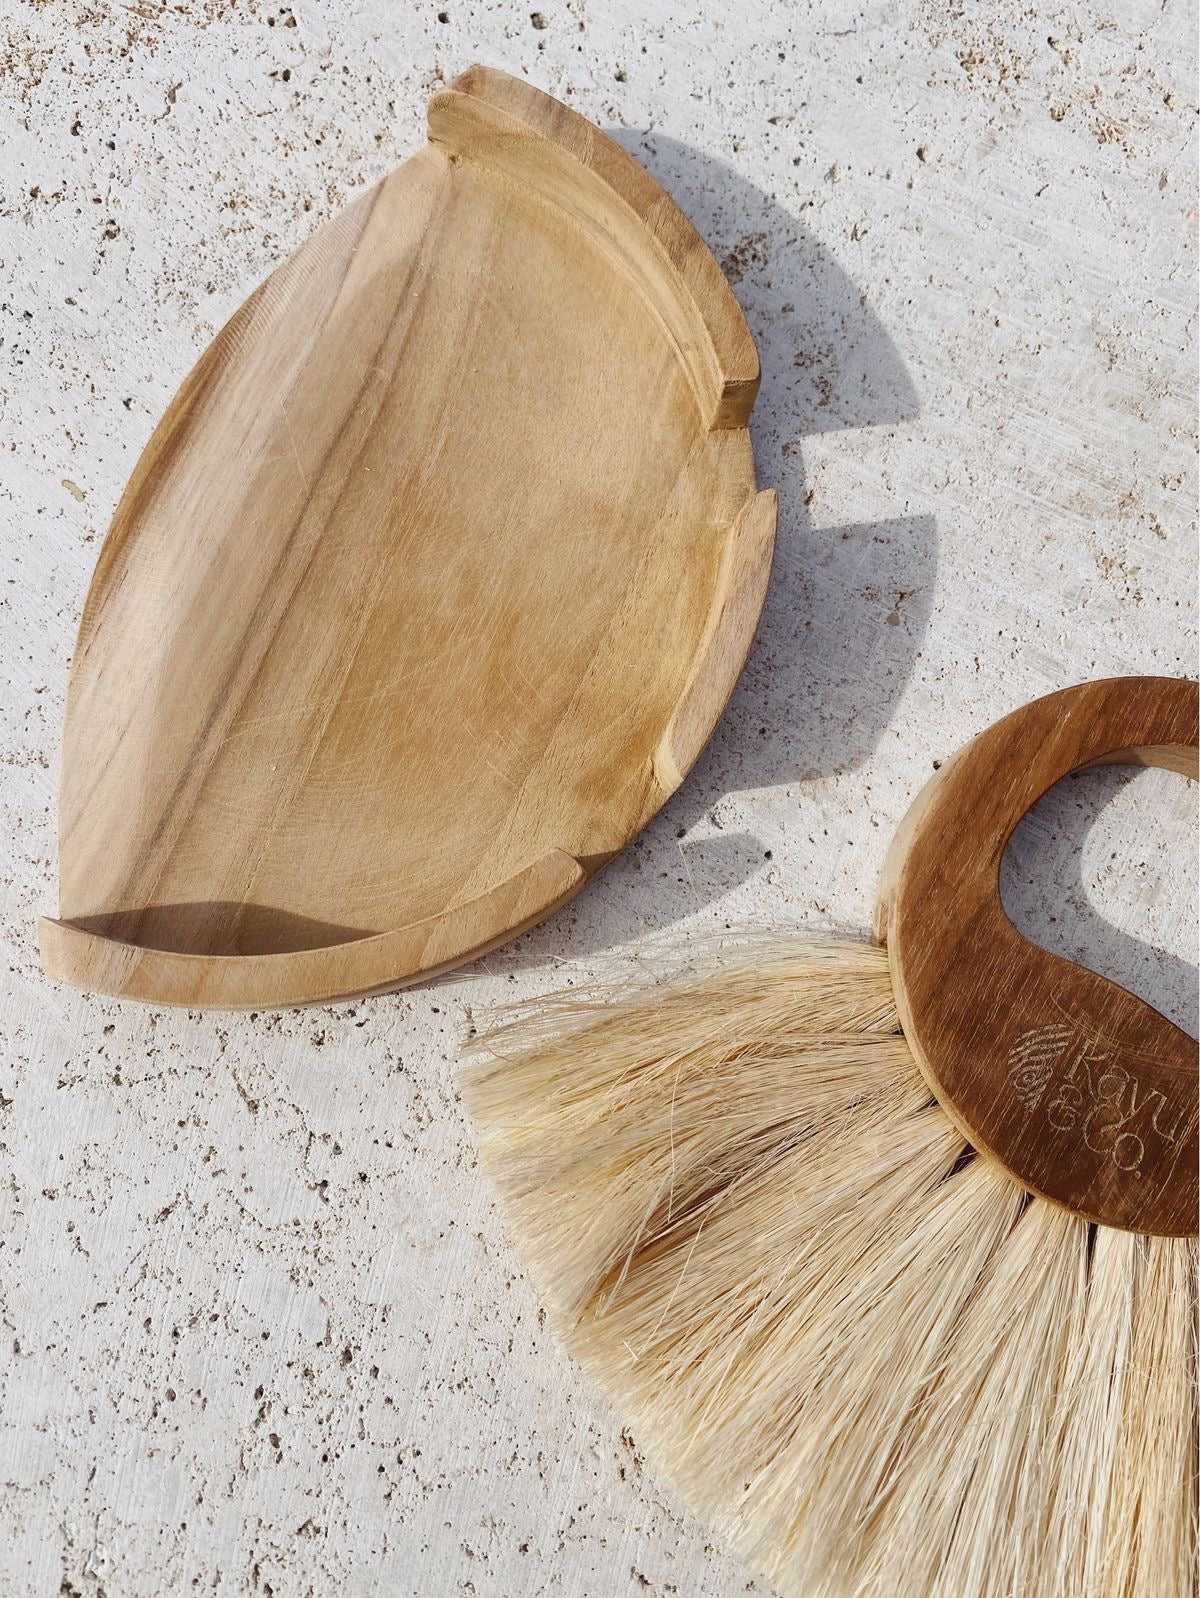 teak wooden dustpan and brush set